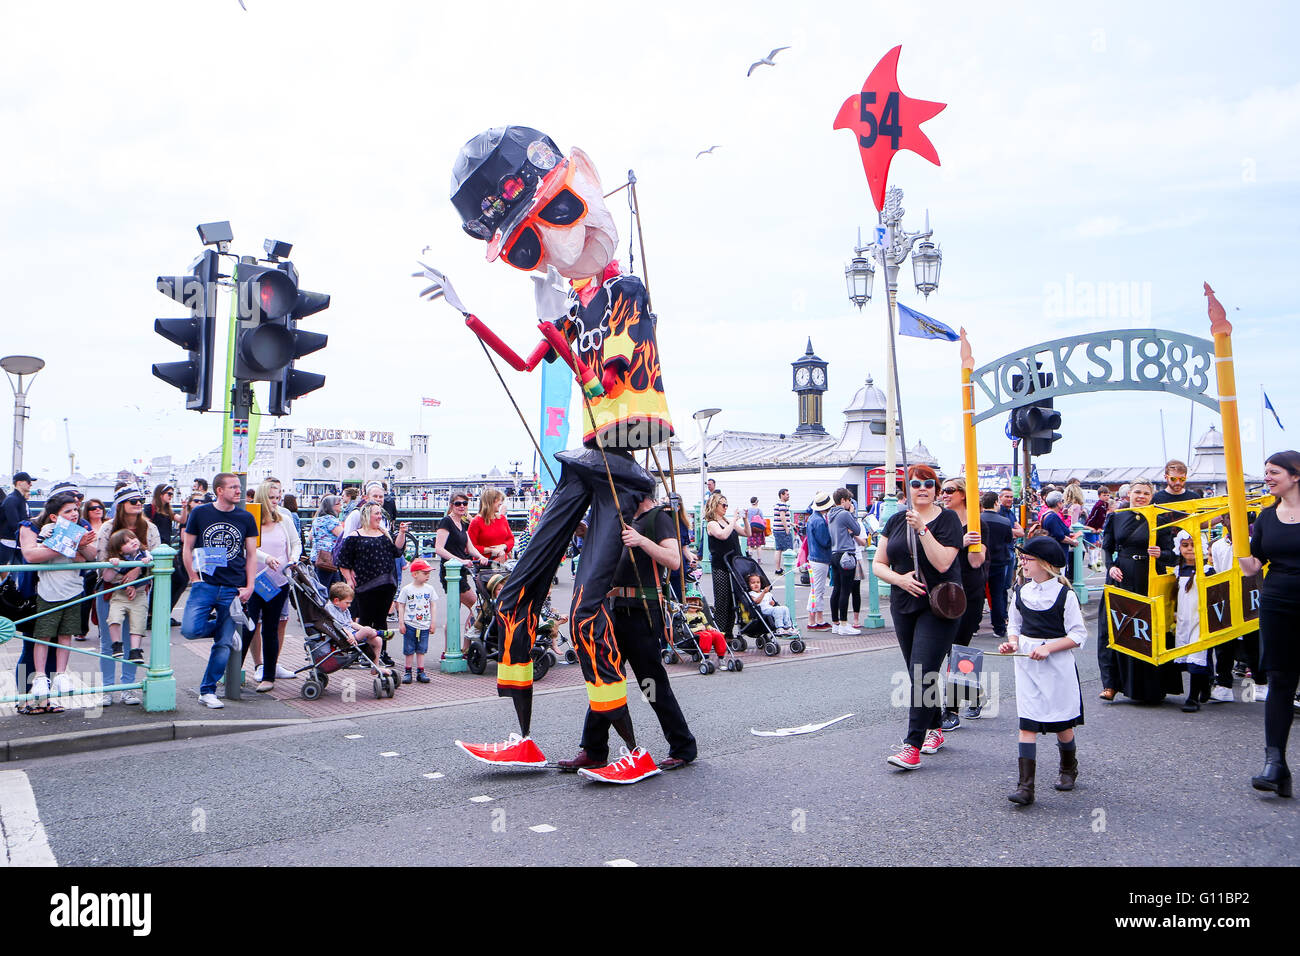 Enfants Brighton's Parade 2016 Banque D'Images